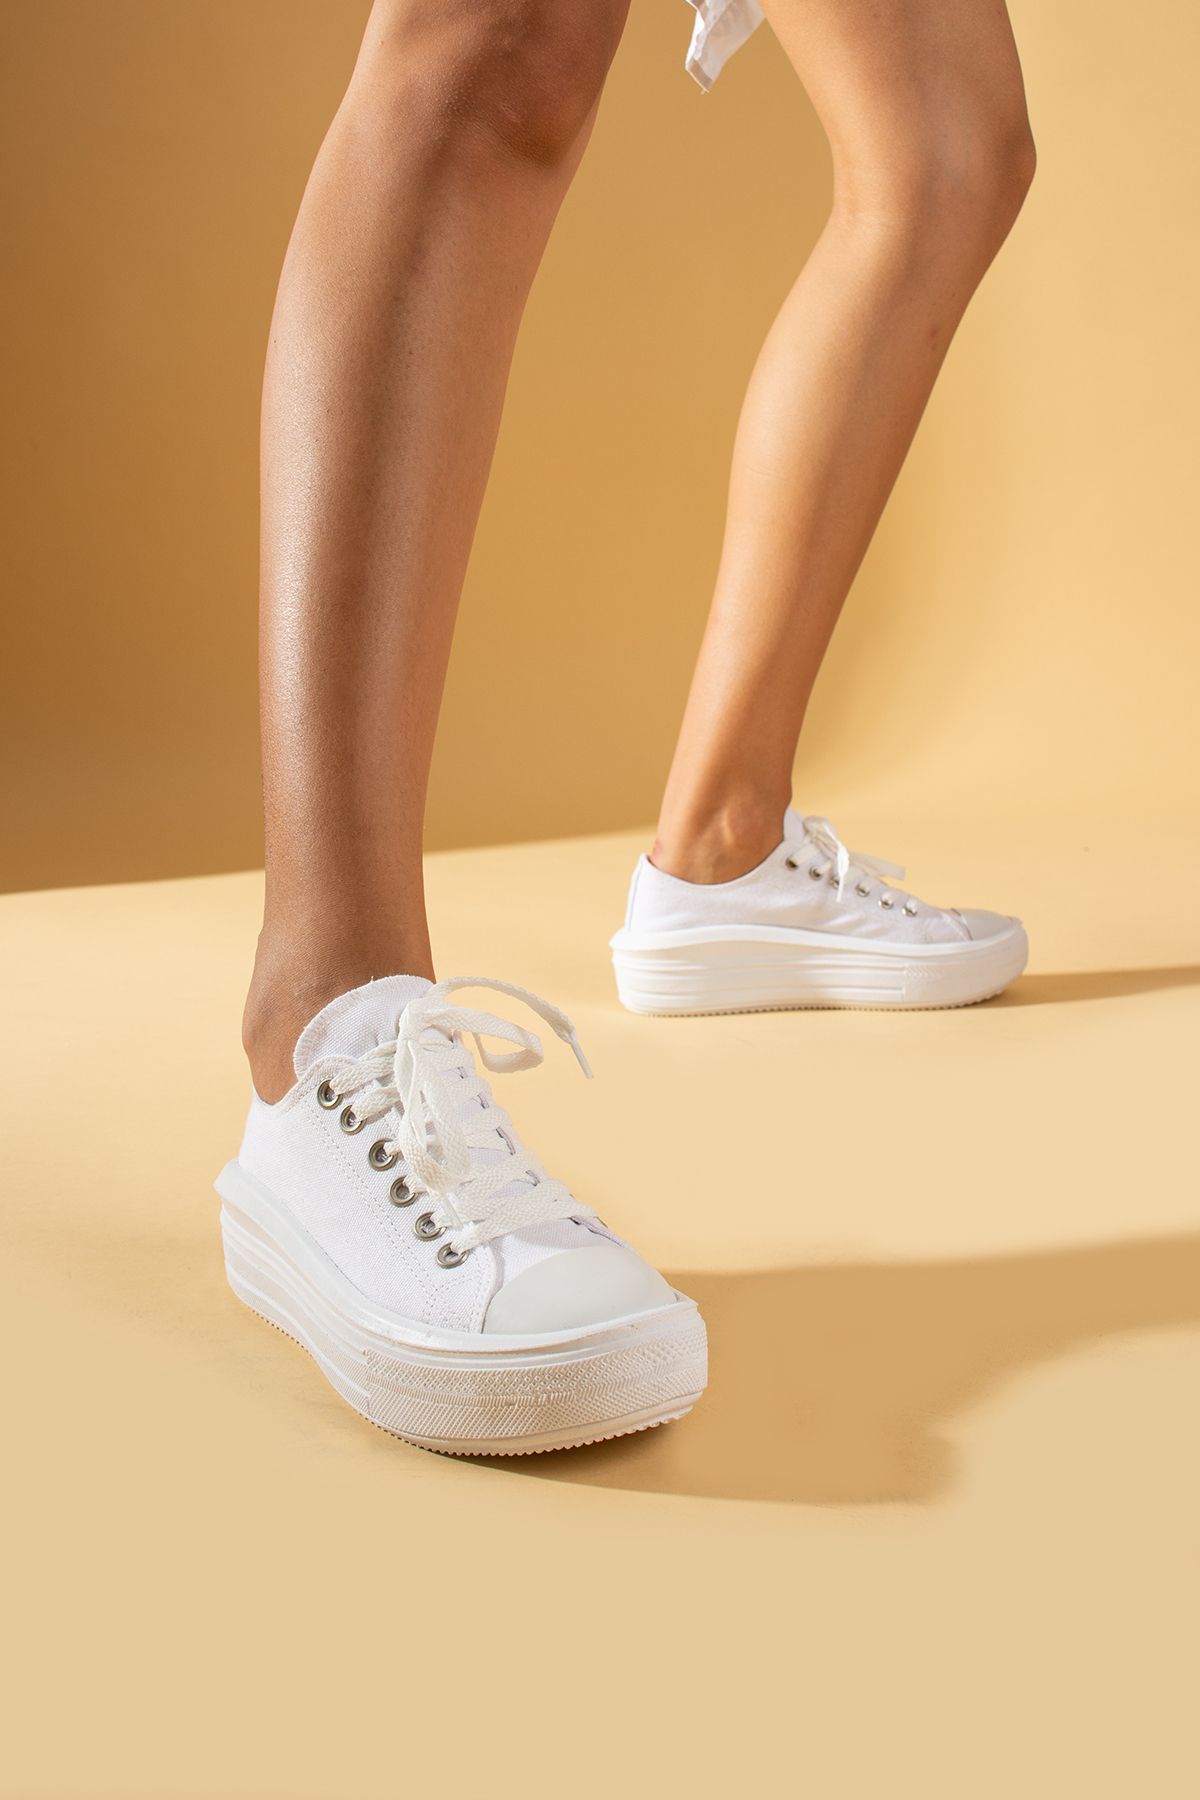 Pembe Potin Kadın Beyaz Unisex Yüksek Taban Convers Model Keten Sneaker